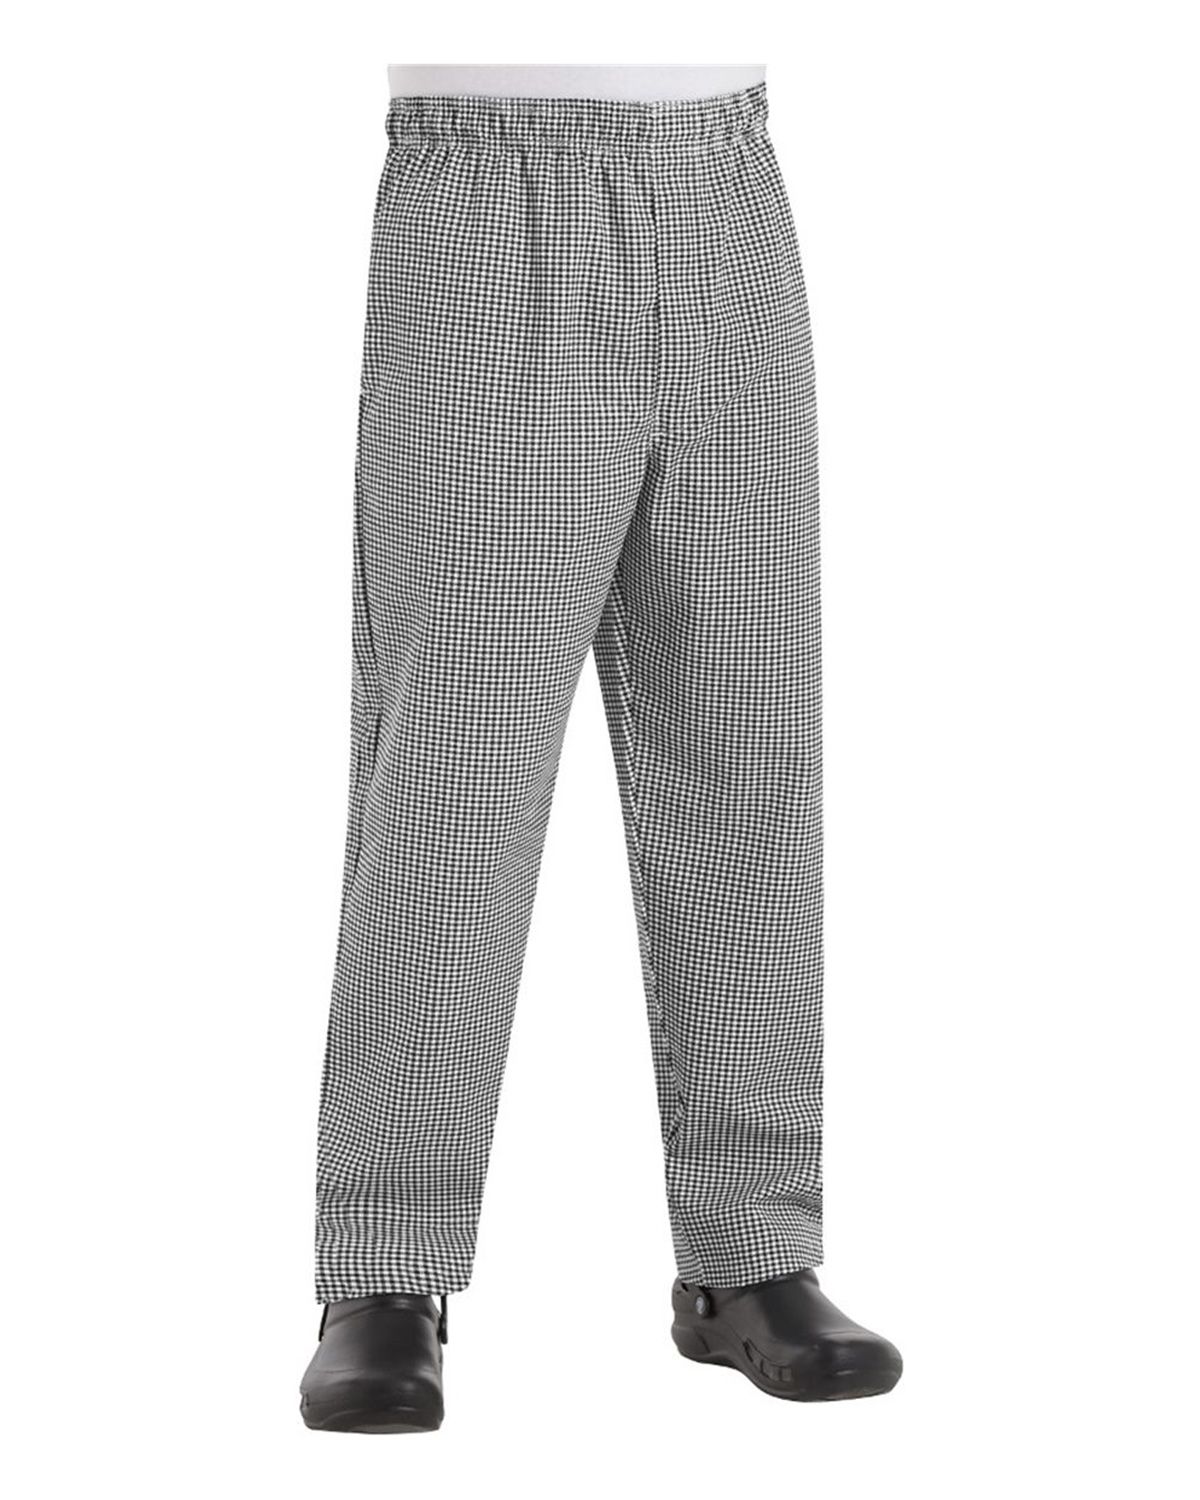 Black & White check elastic waist size Medium Chefs Trousers 